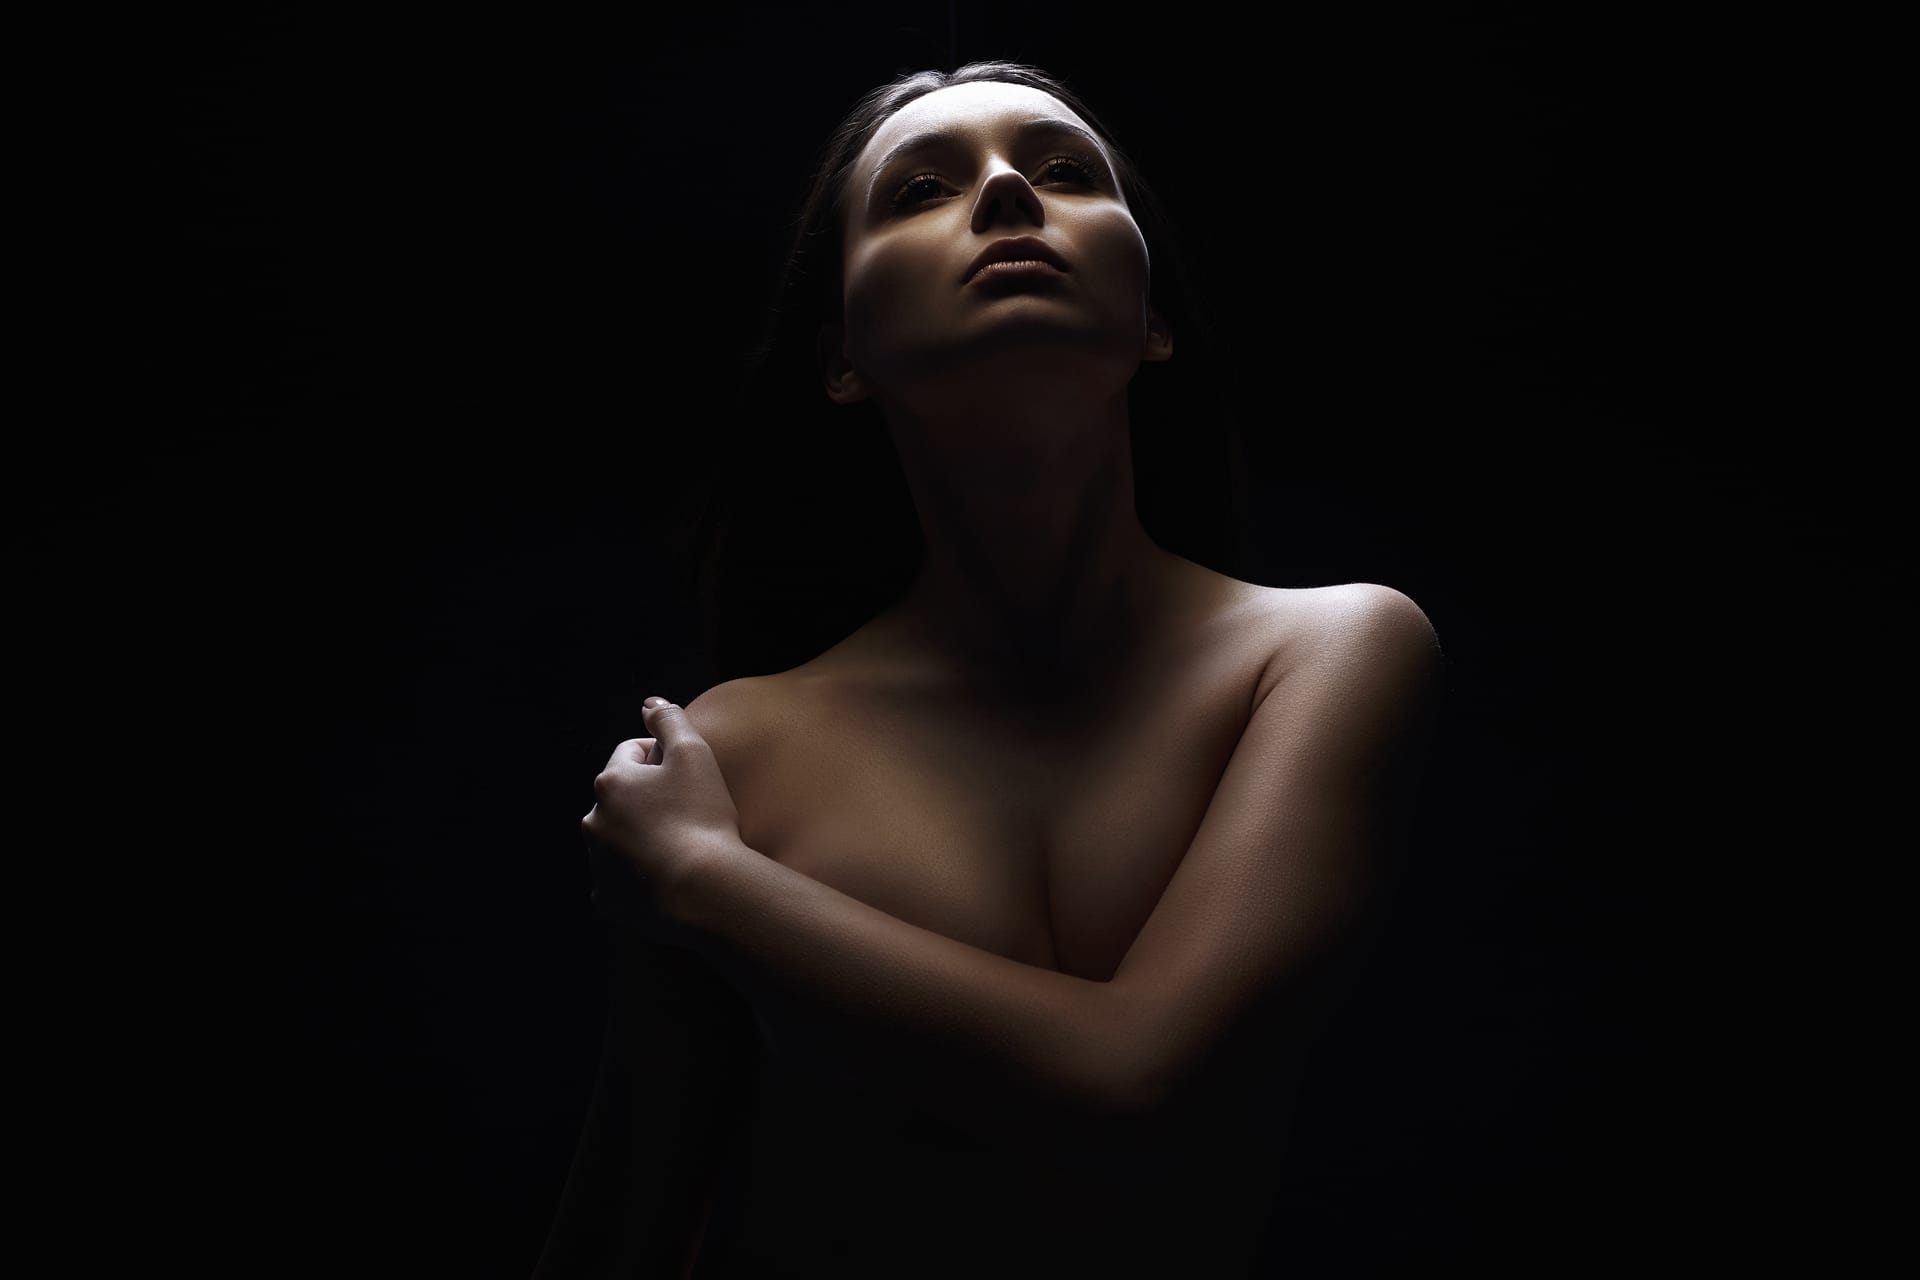 Nude woman dark female silhouette image